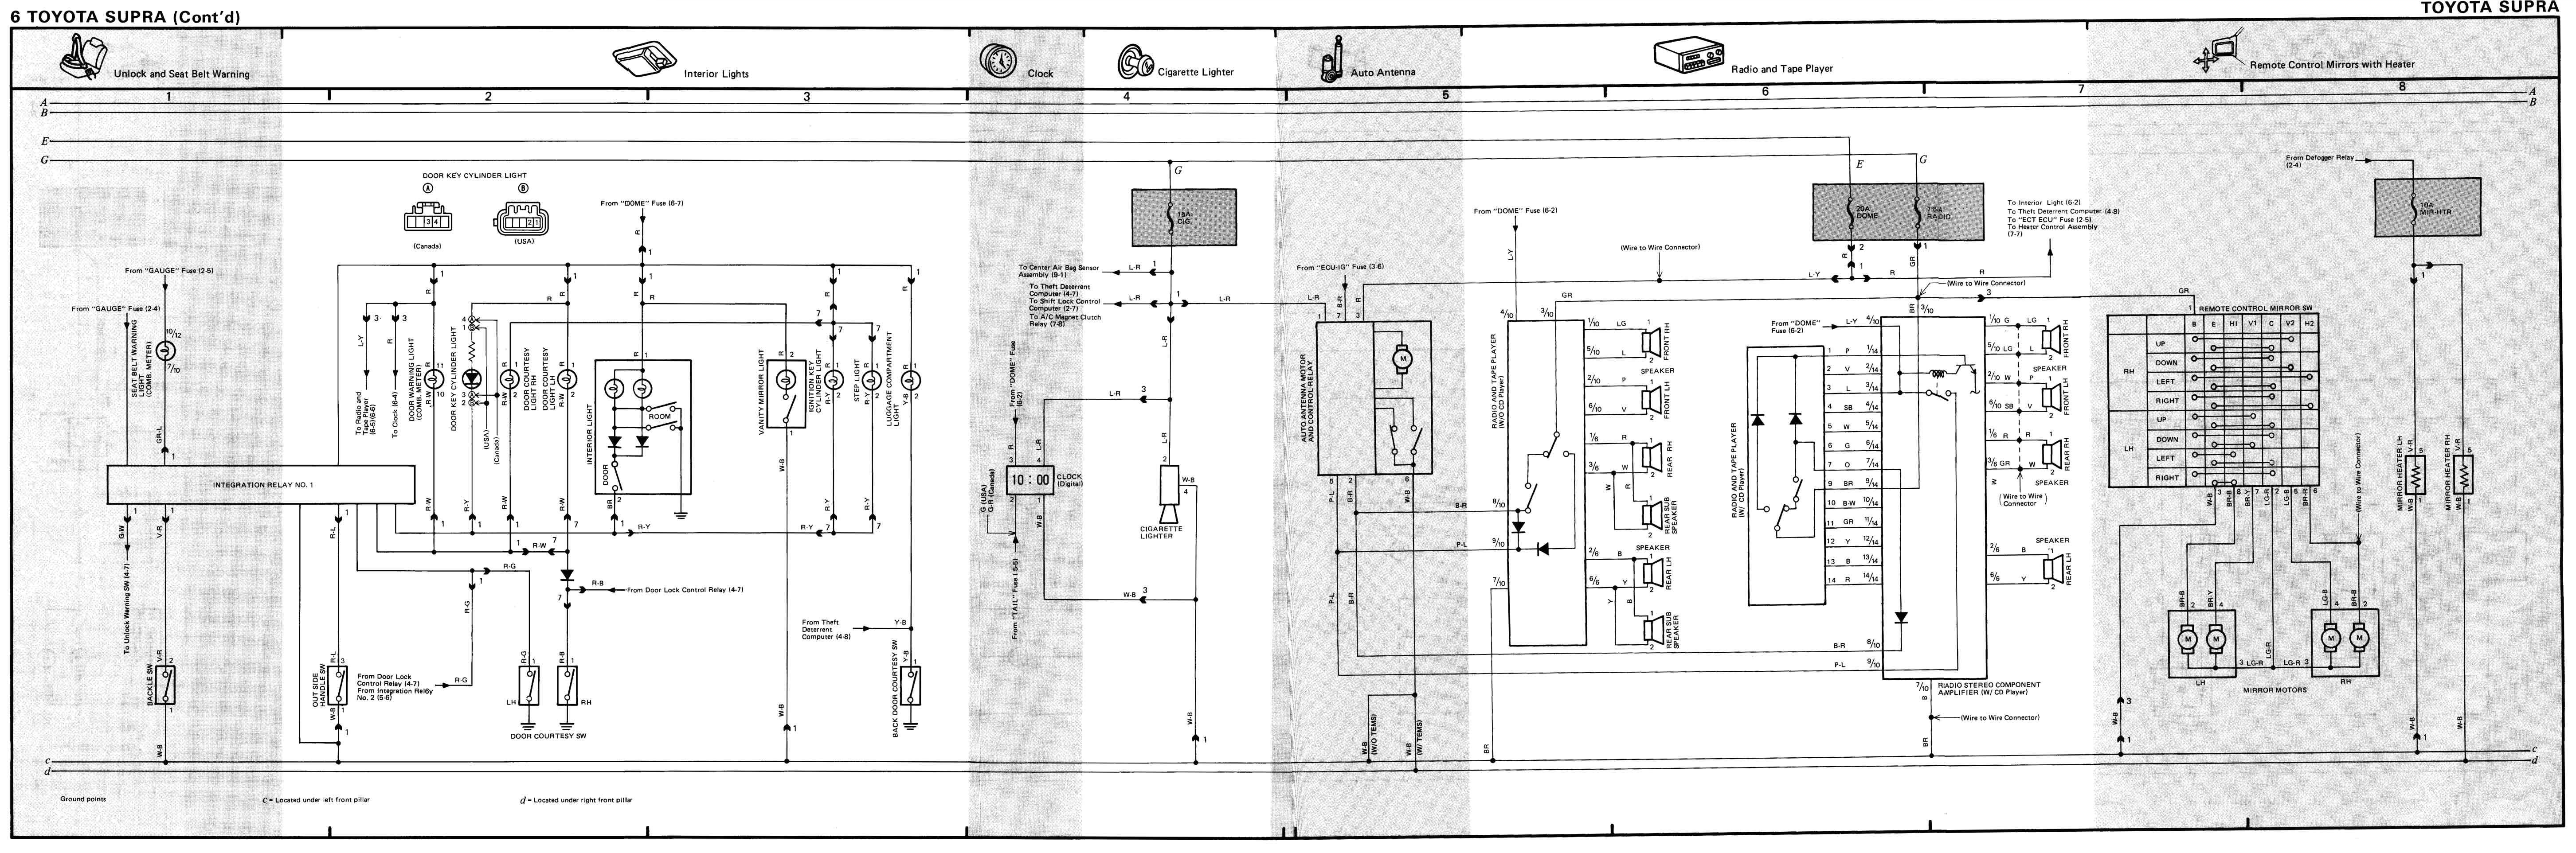 87 supra wiring diagram wiring diagram expert 87 toyota supra wiring harness diagram